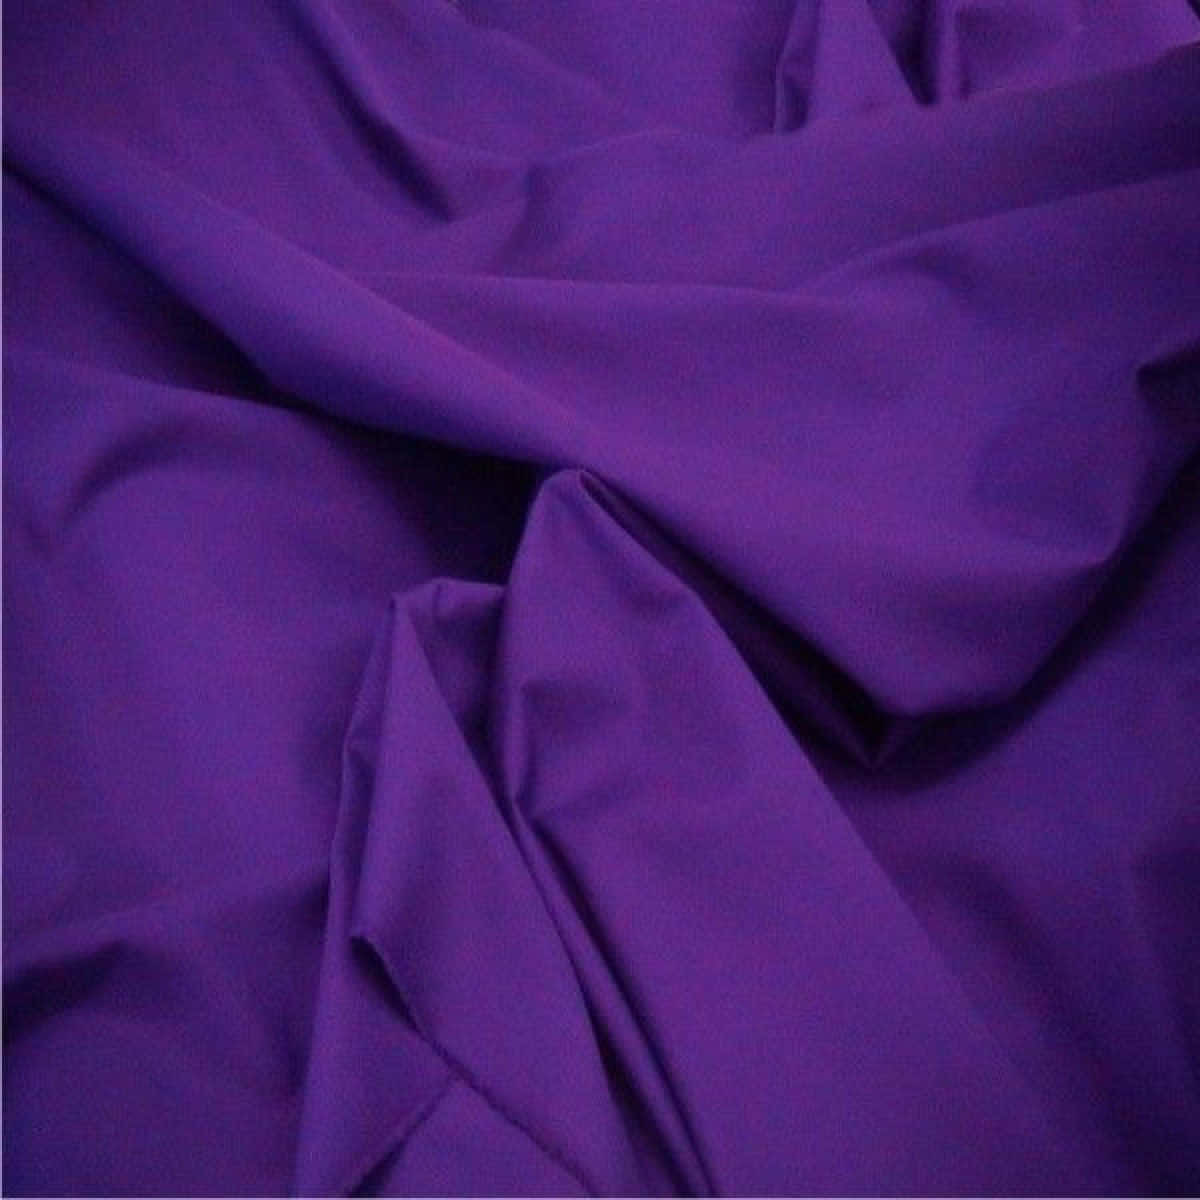 Vibrant Purple Fabrics Wallpaper